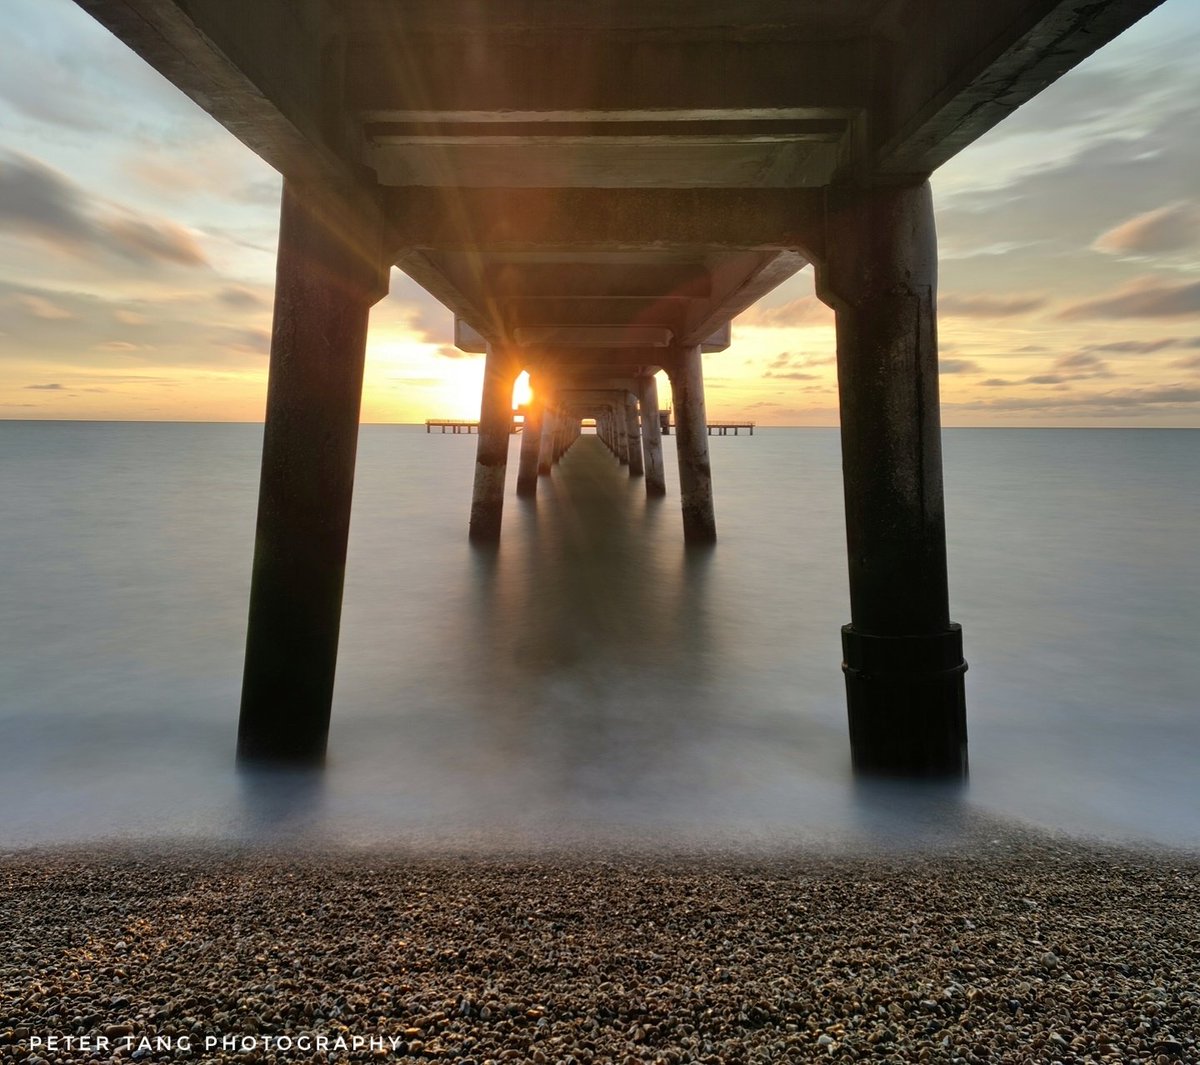 Deal Pier long exposure at sunrise
#sunrise #dealpier #kent #uk #longexpo #longexposure #kentphoto #picoftheday #sunriseoftheday #naturalbeauty #seascape